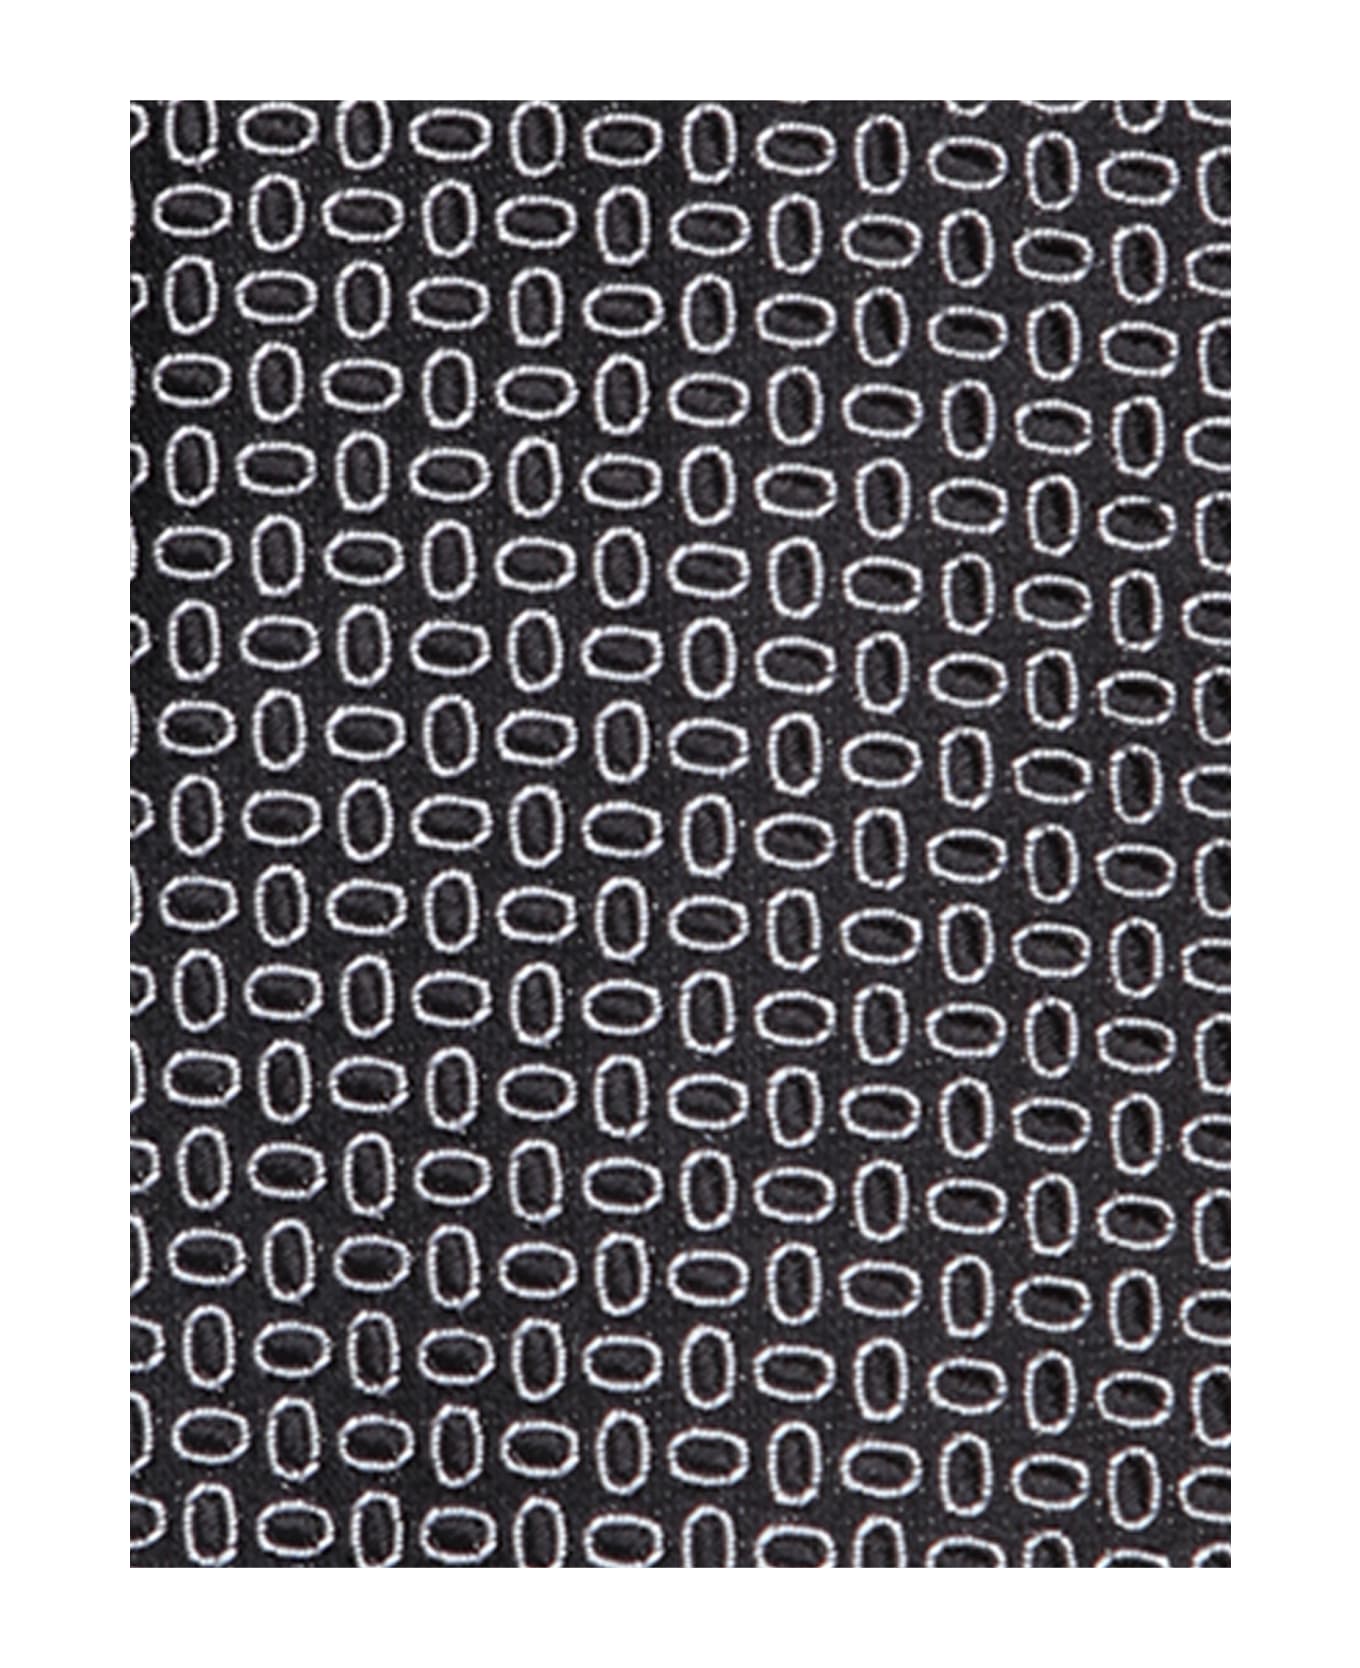 Lardini Micro Pattern Black/grey Tie - Black ネクタイ